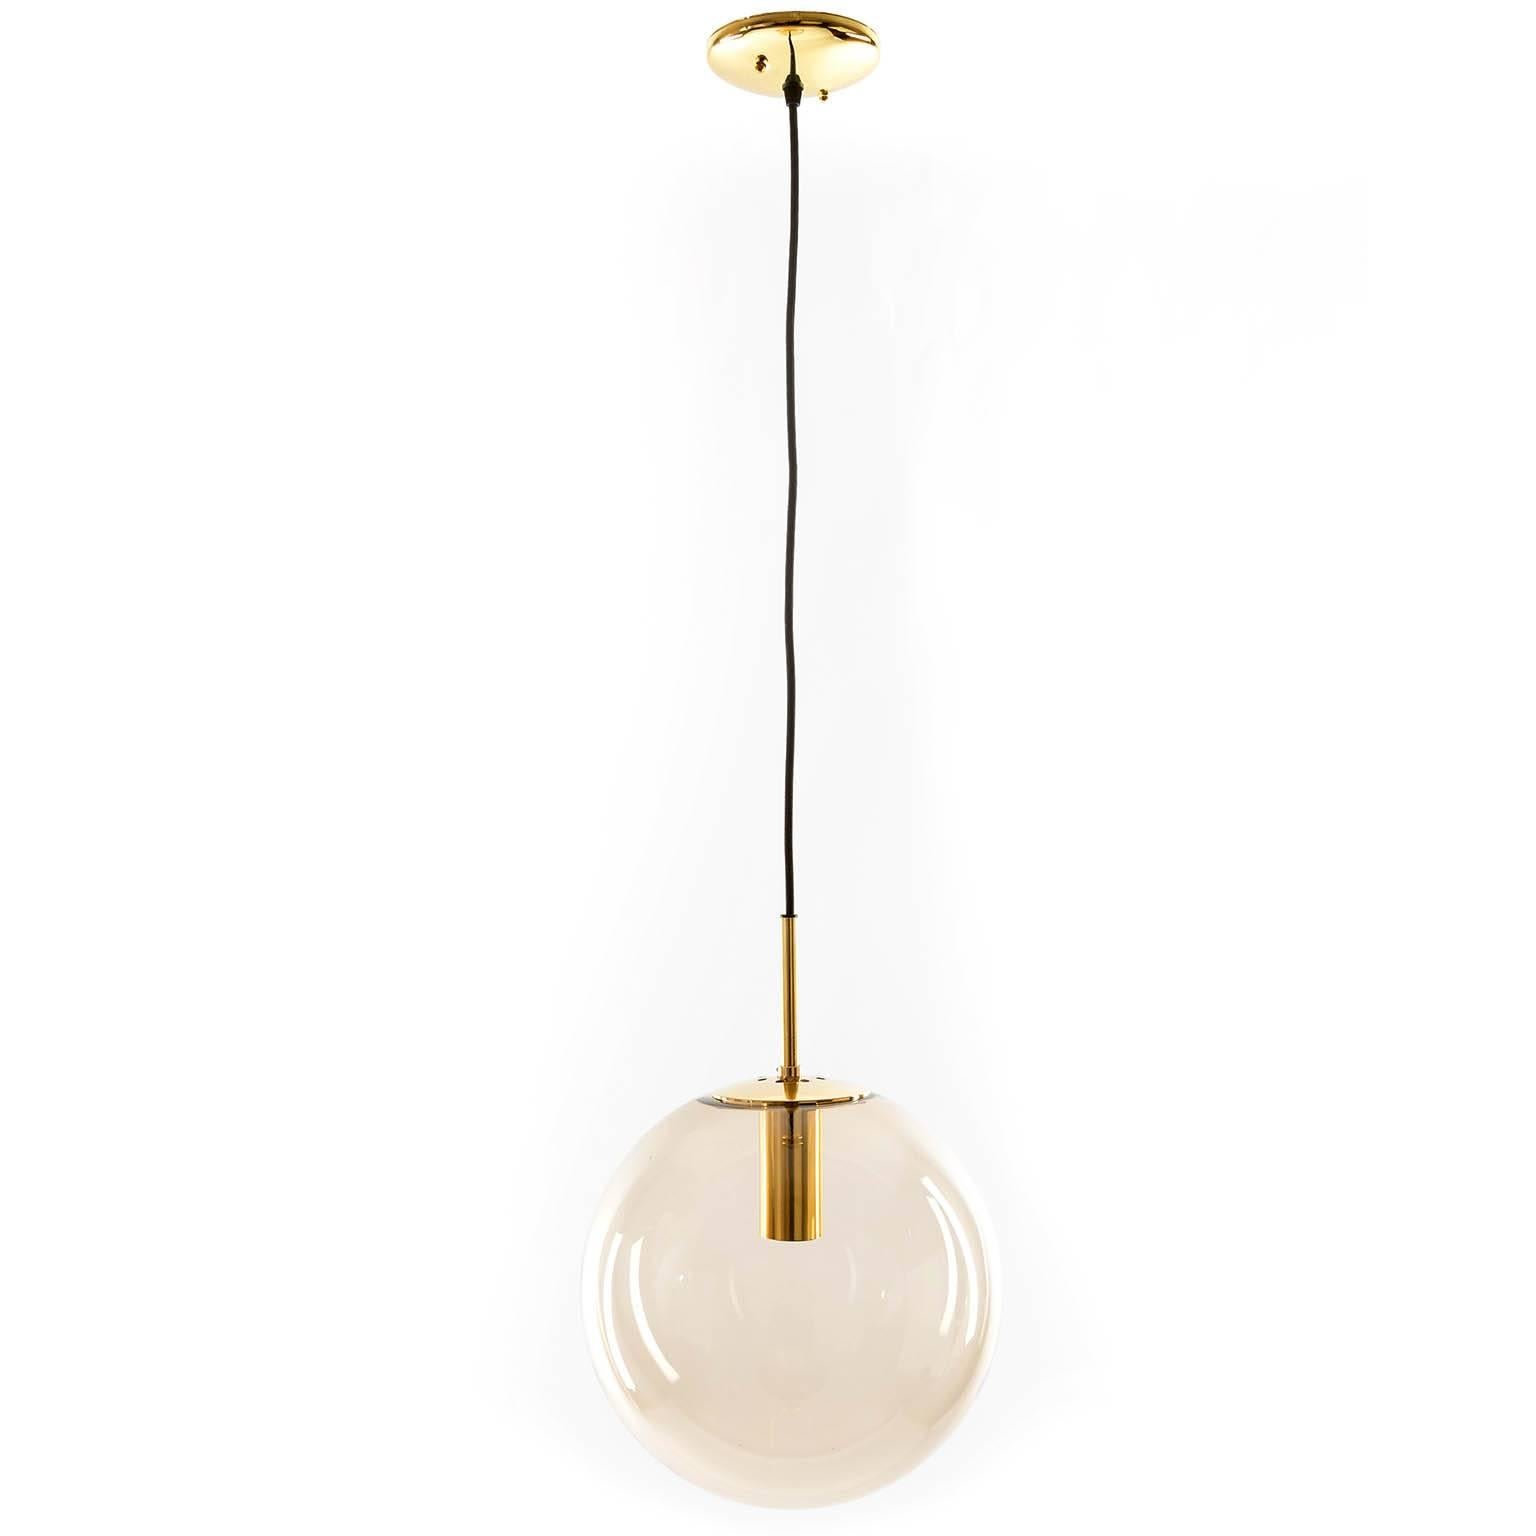 Set of Six Limburg Globe Pendant Lights, Brass and Smoked Glass, 1970s (Deutsch)